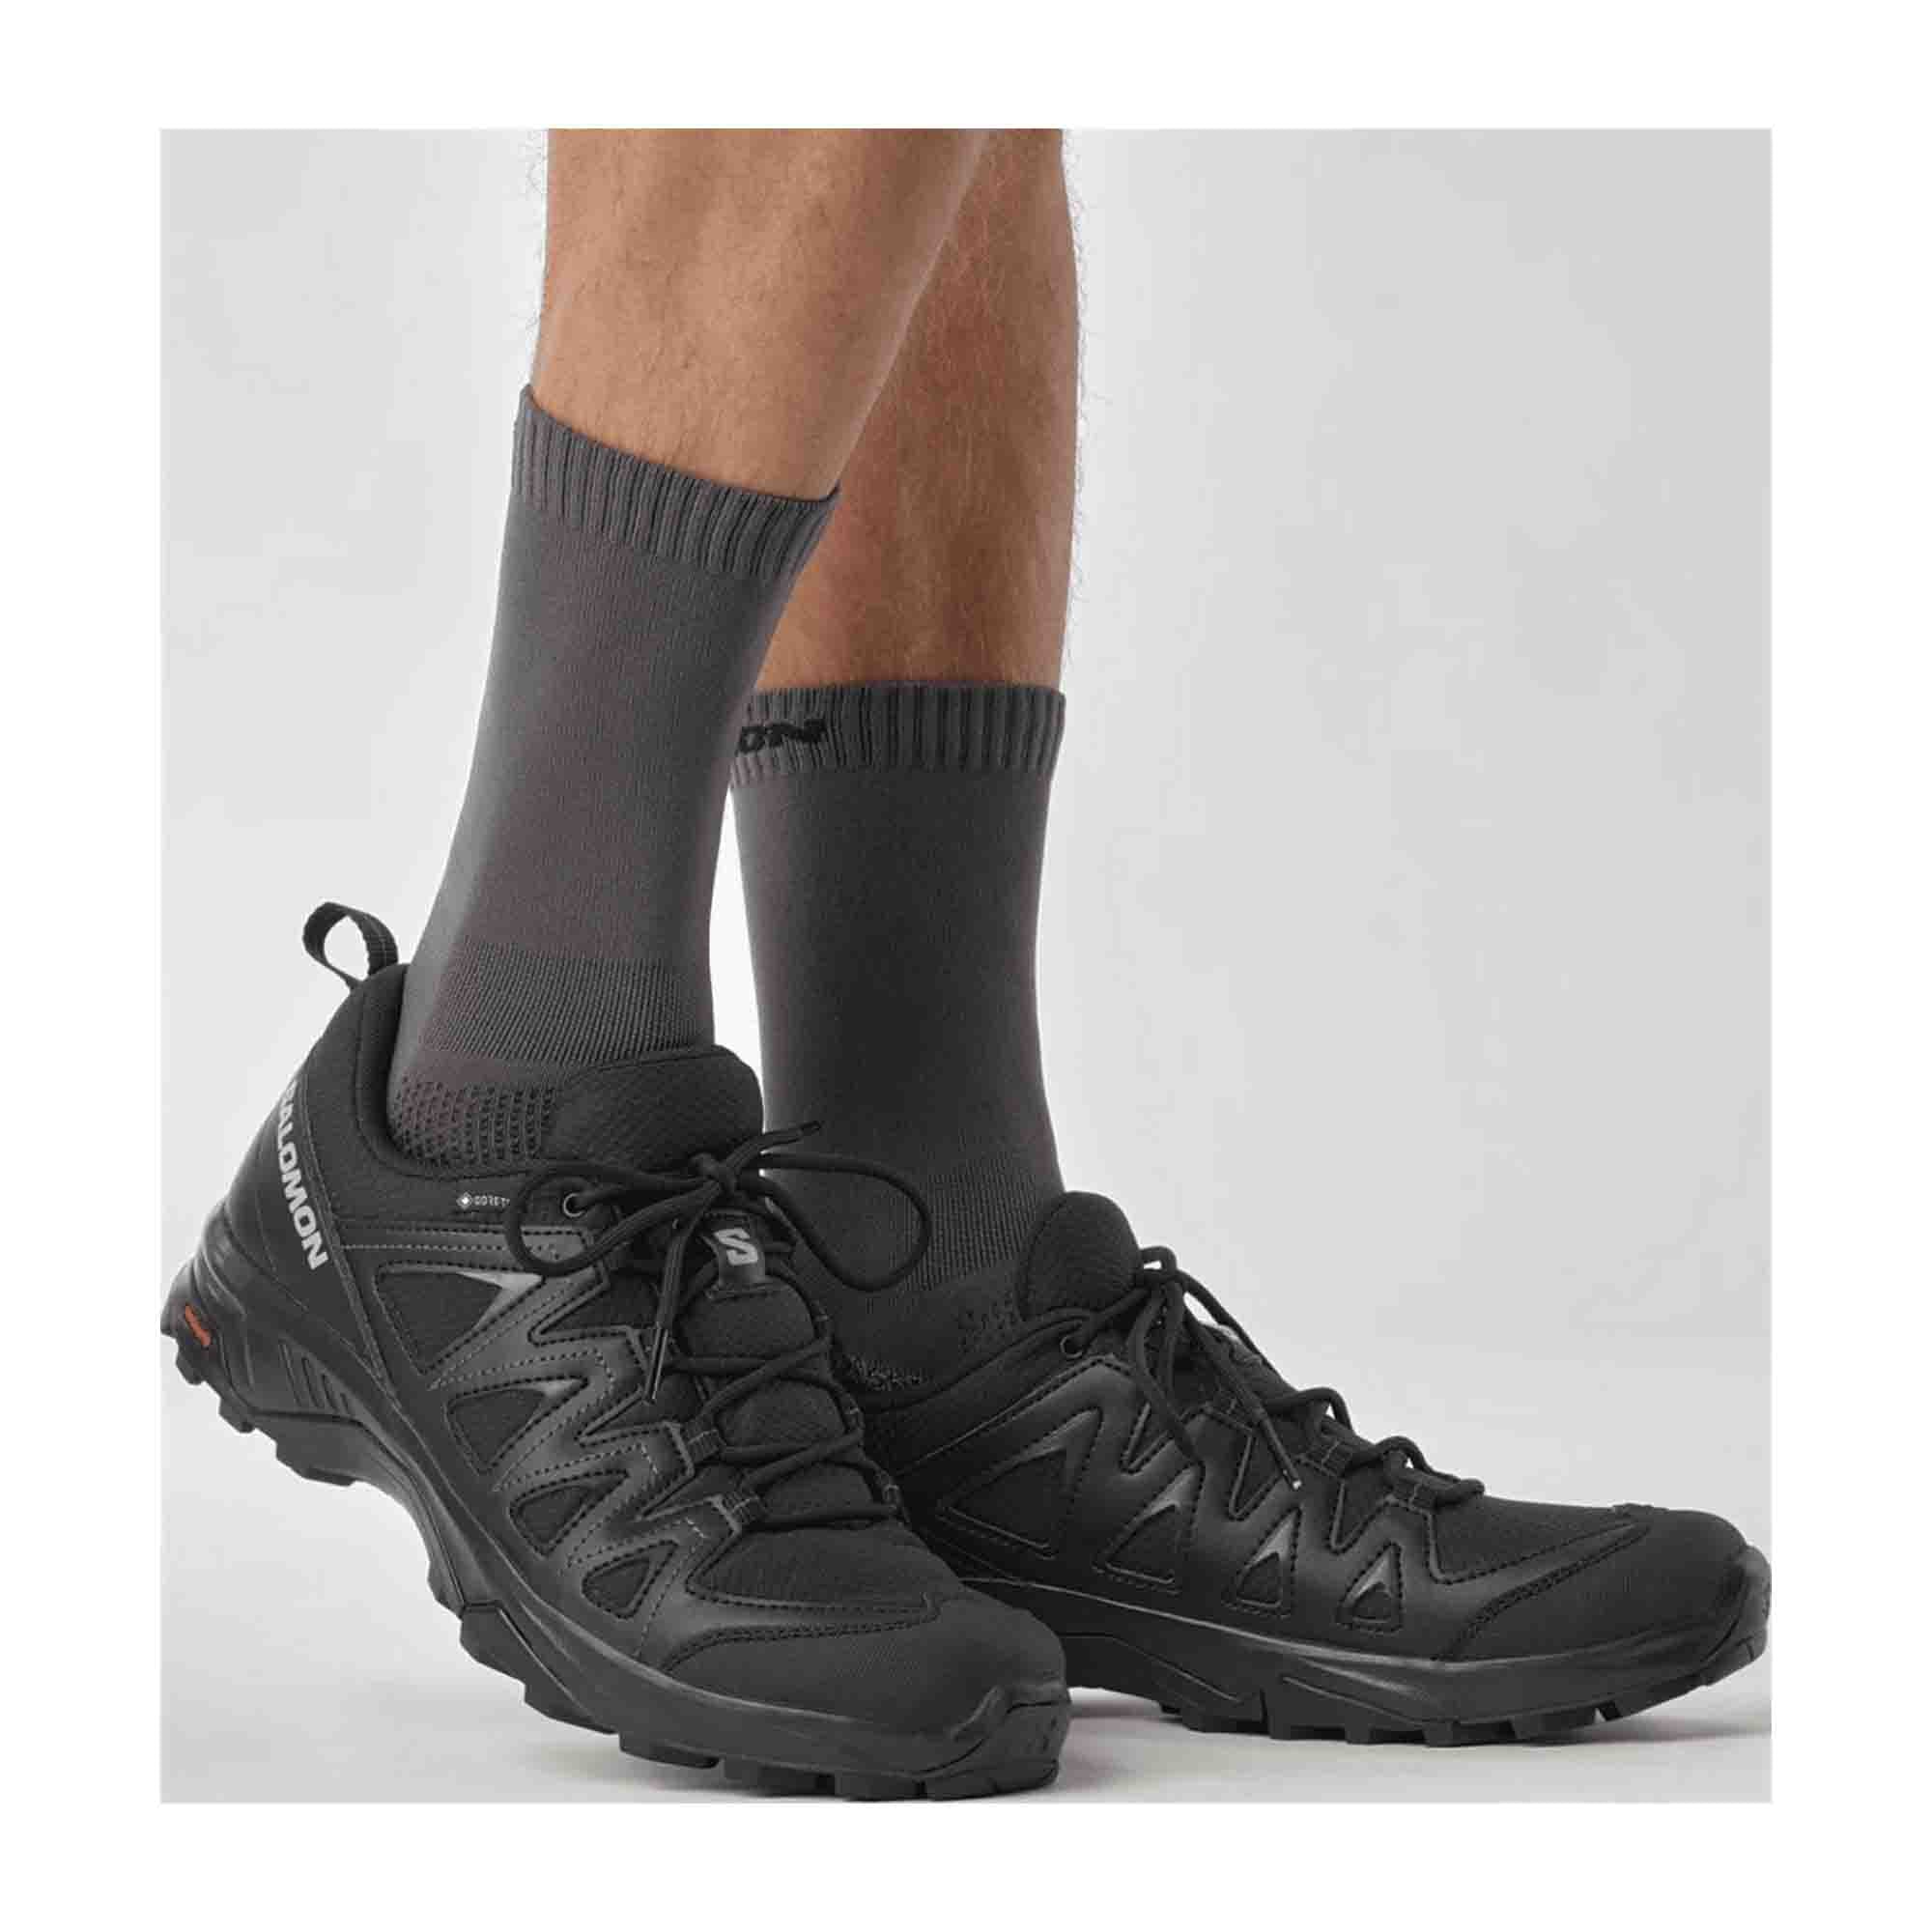 Salomon X Braze GTX for men, black, shoes